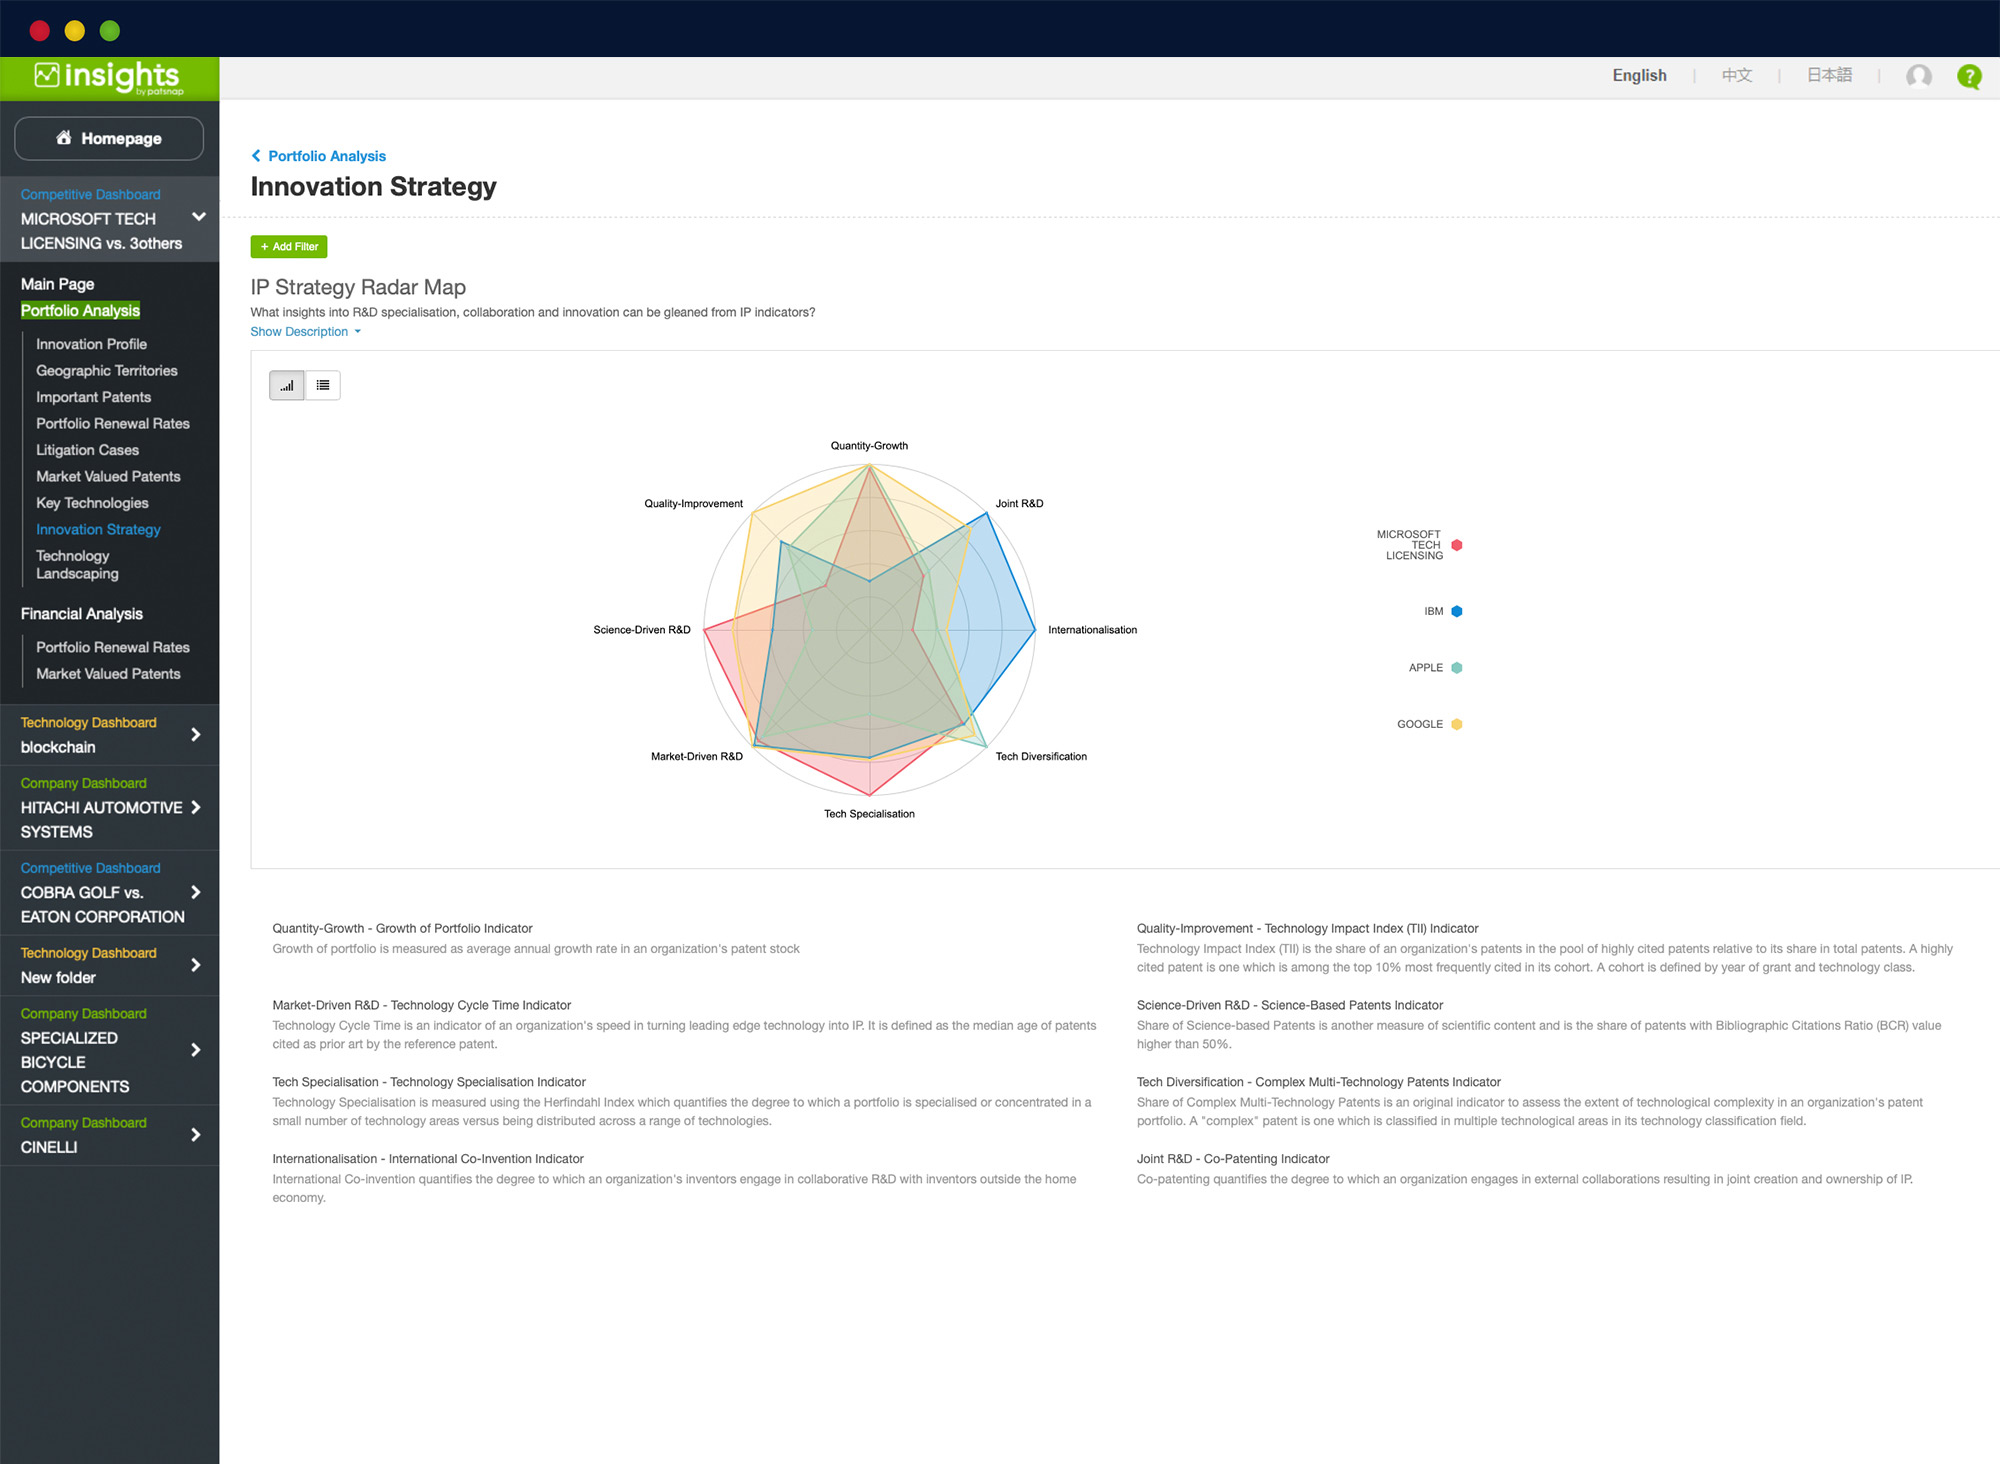 PatSnap platform screen grab showing an innovation strategy graph